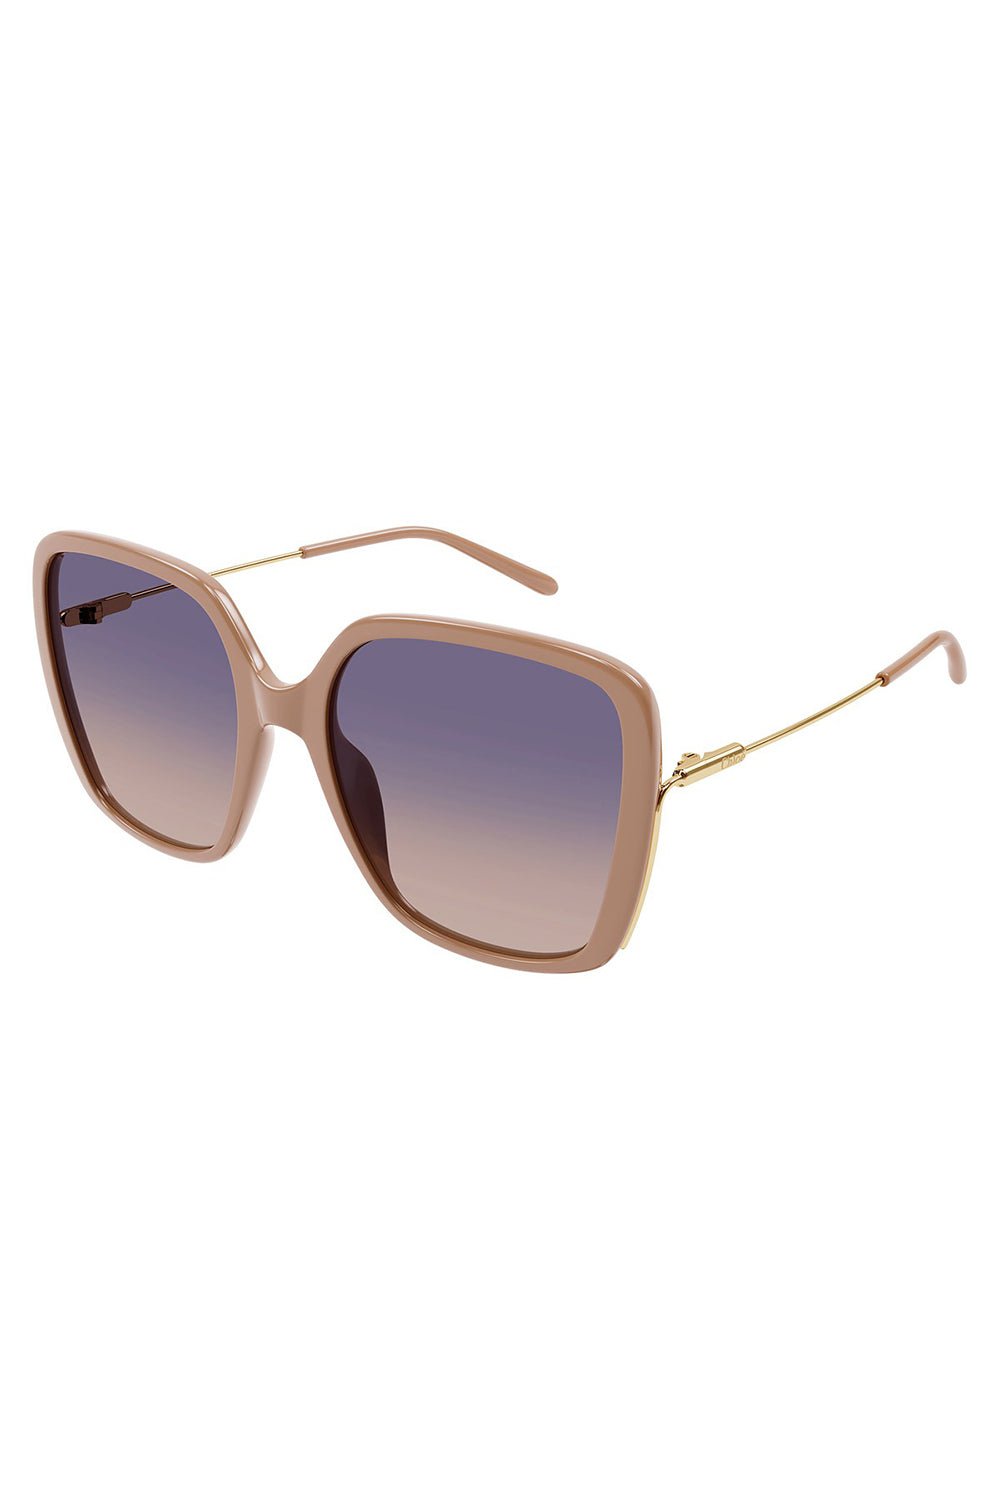 CHLOÉ-Elys Square Sunglasses - Nude-NUDE/GOLD/BLACK